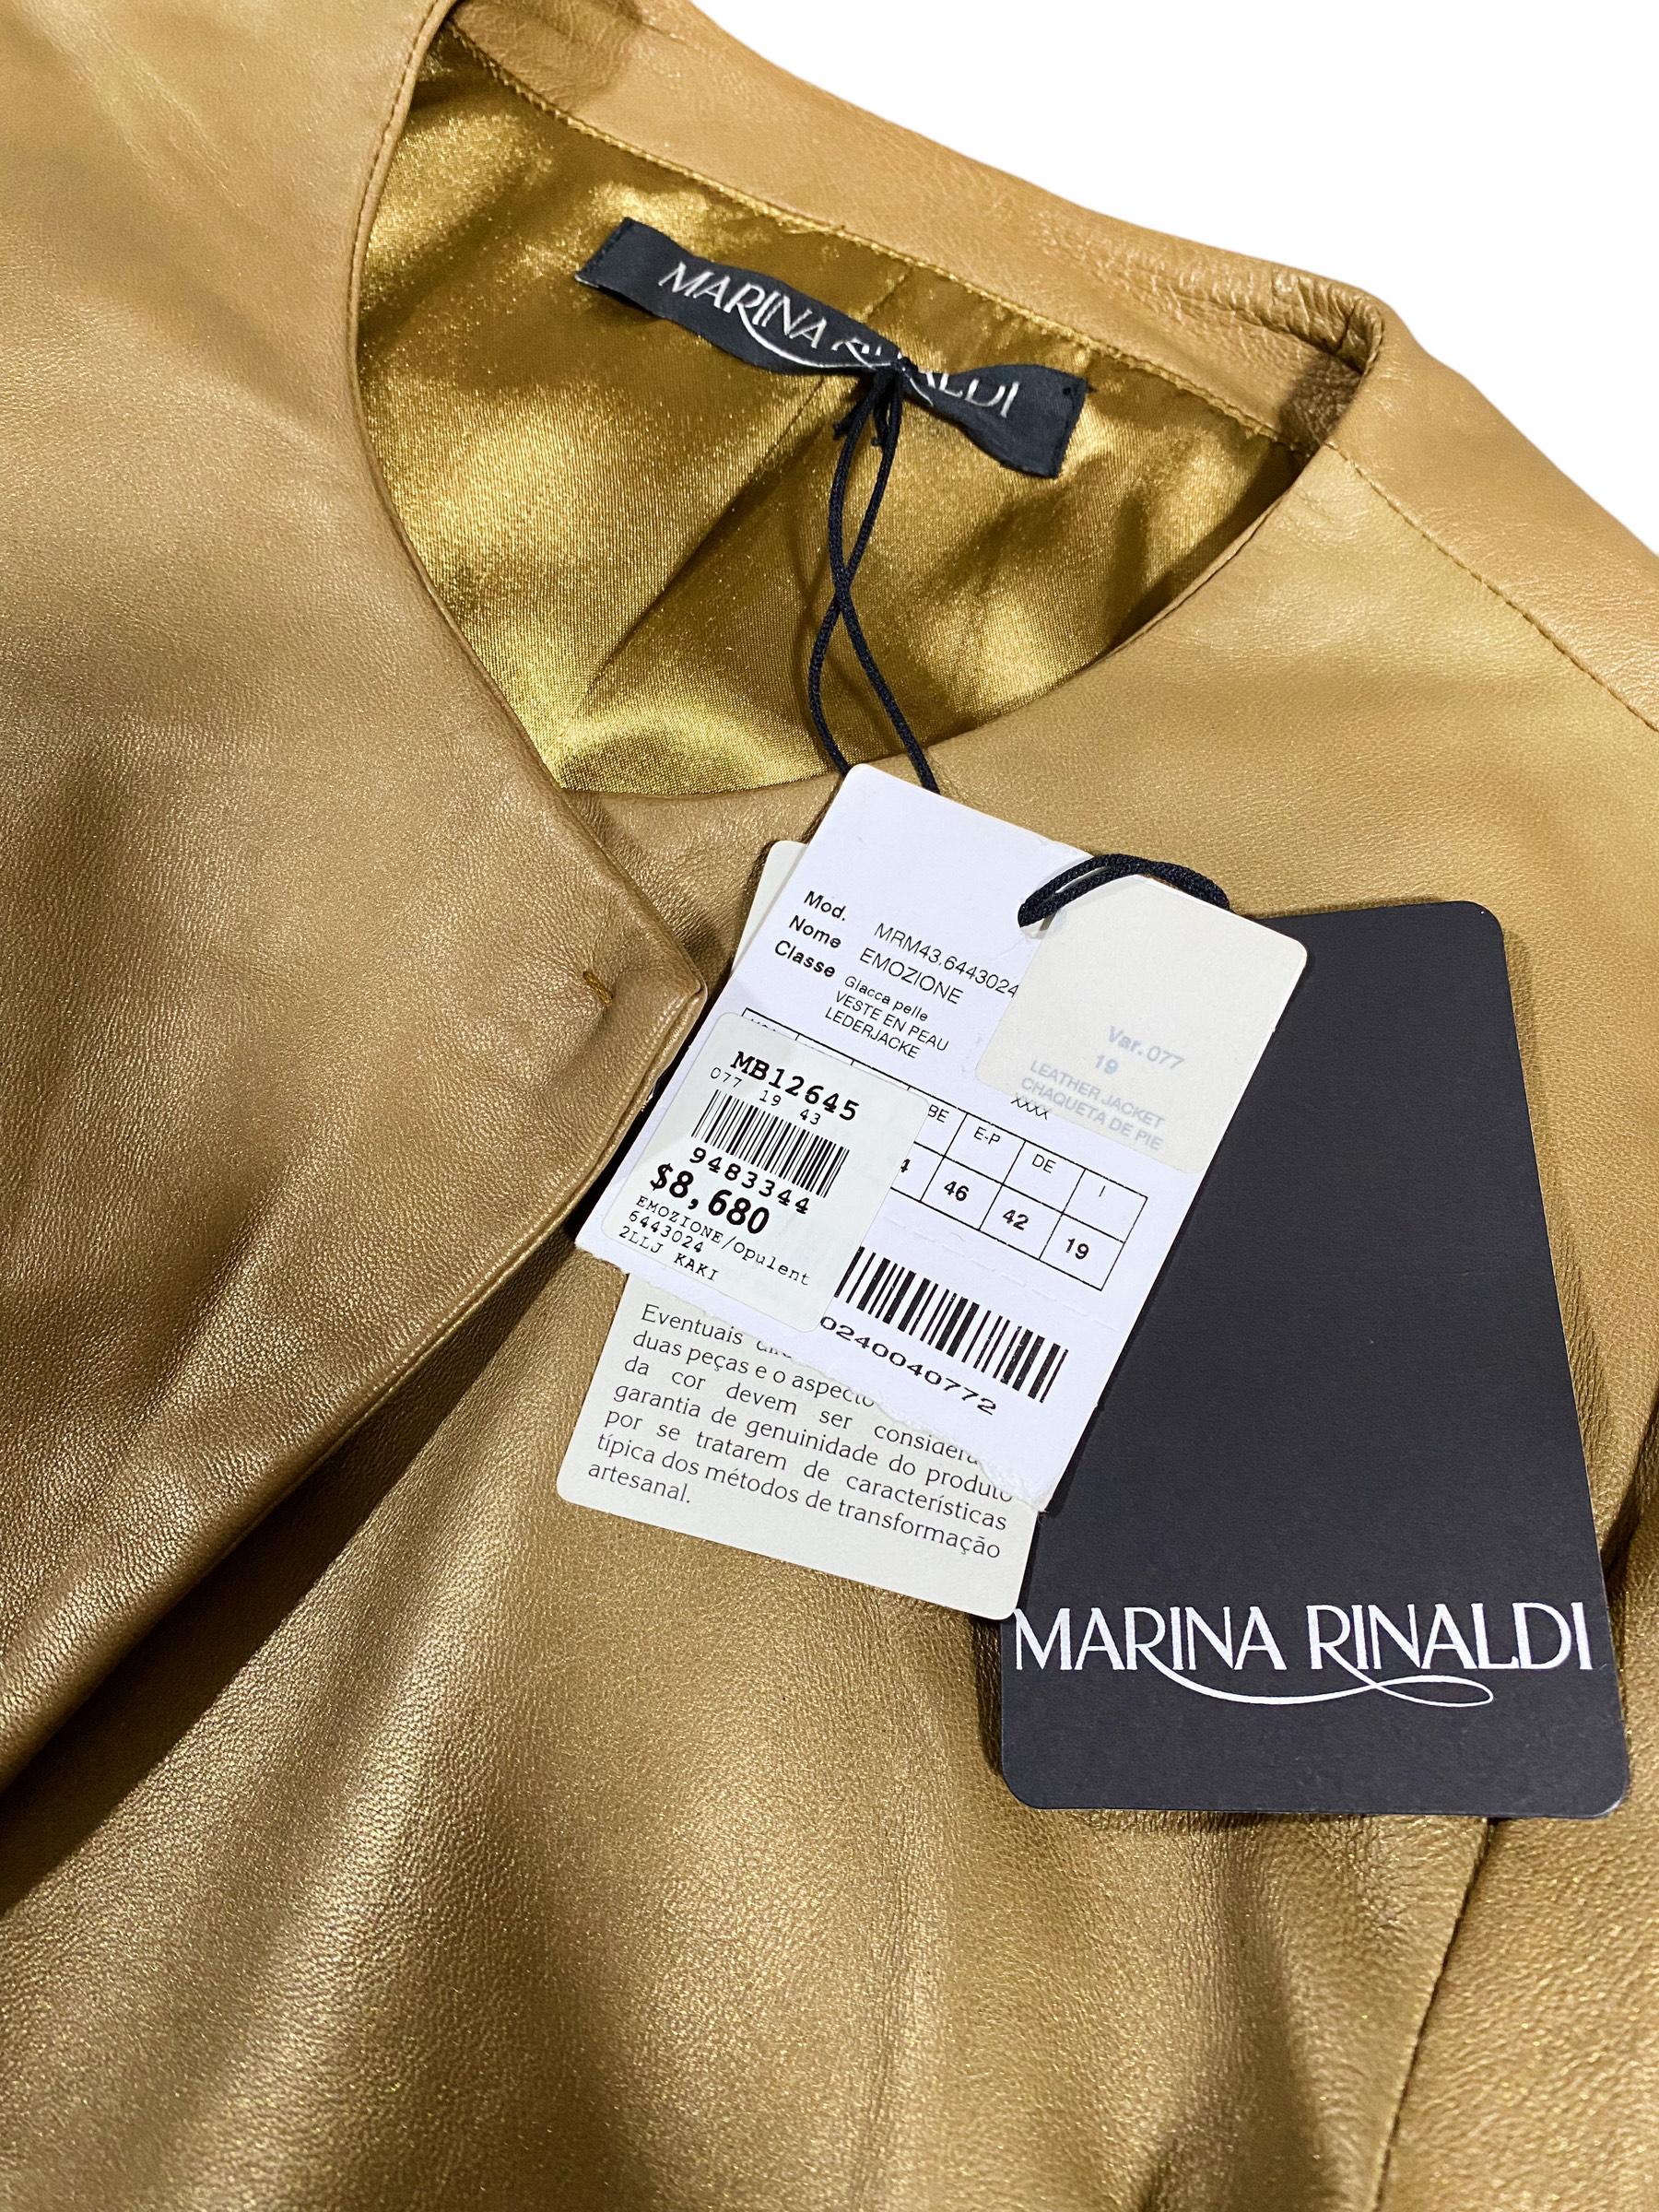 Marina Rinaldi x Max Mara Genuine Leather Jacket - Limited Edition For Sale 2